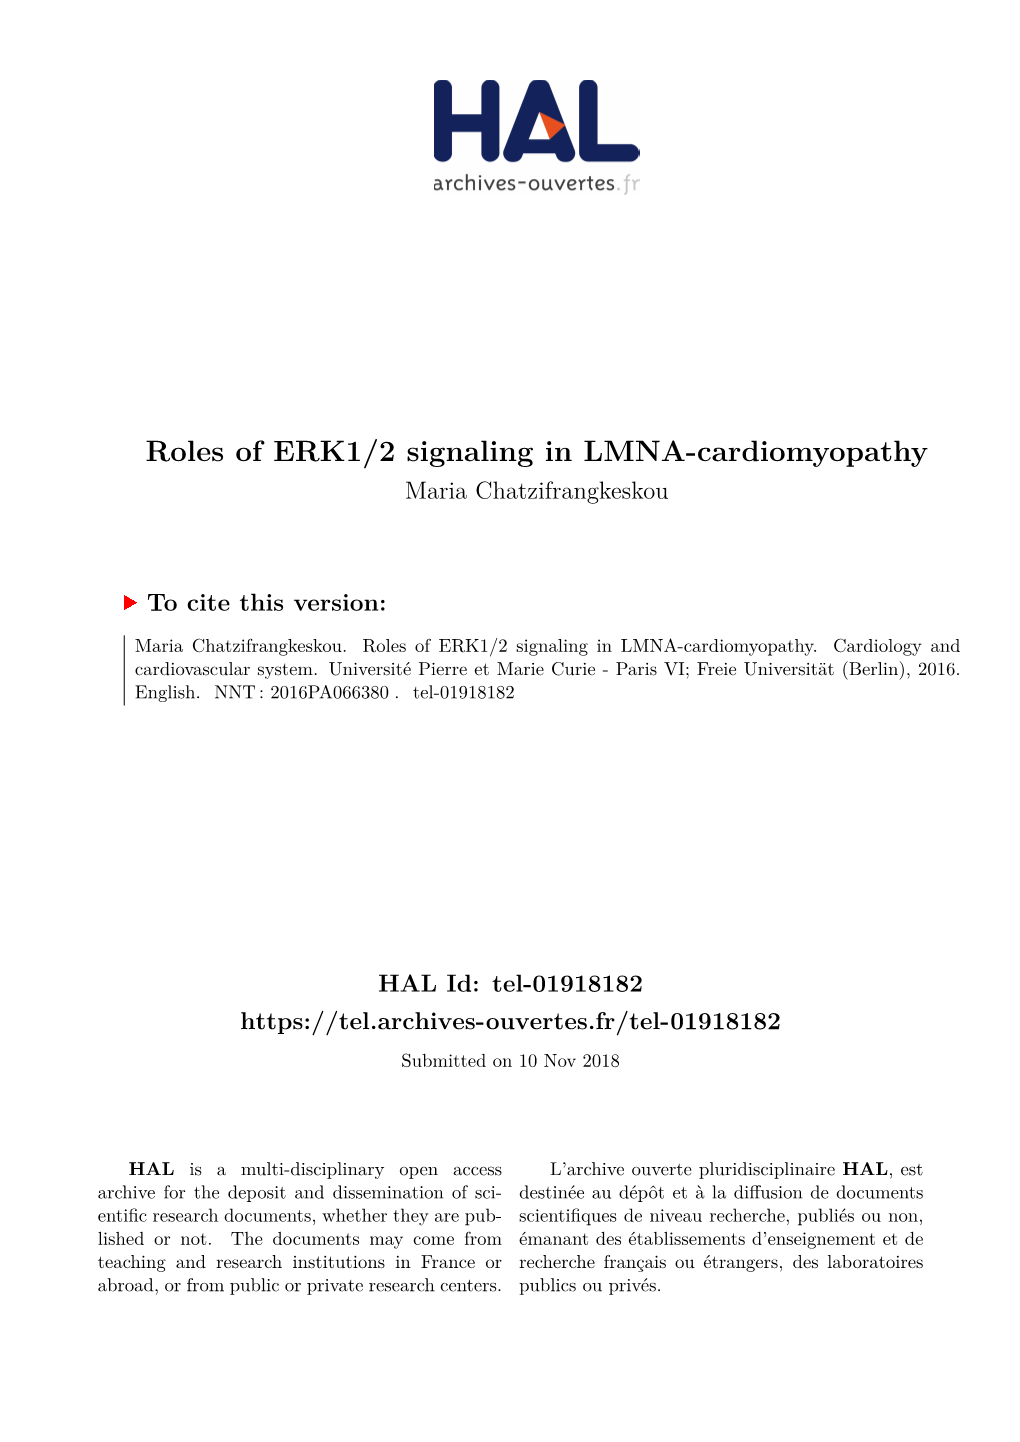 Roles of ERK1/2 Signaling in LMNA-Cardiomyopathy Maria Chatzifrangkeskou